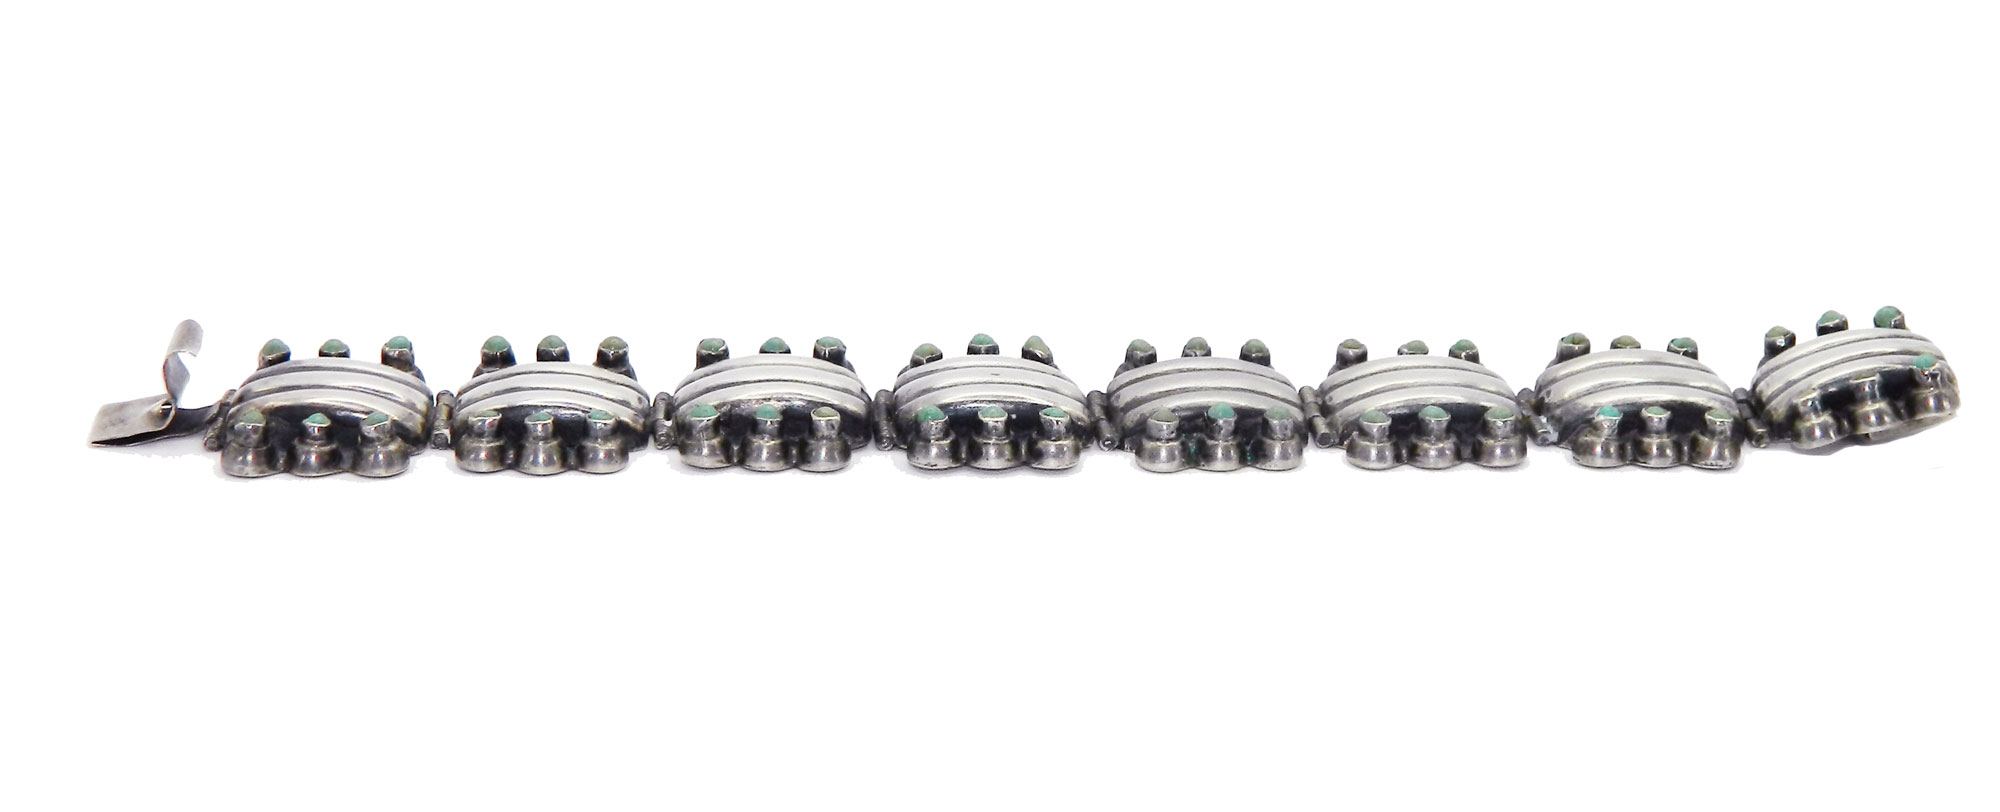 Vintage Mexican silver turquoise bracelet